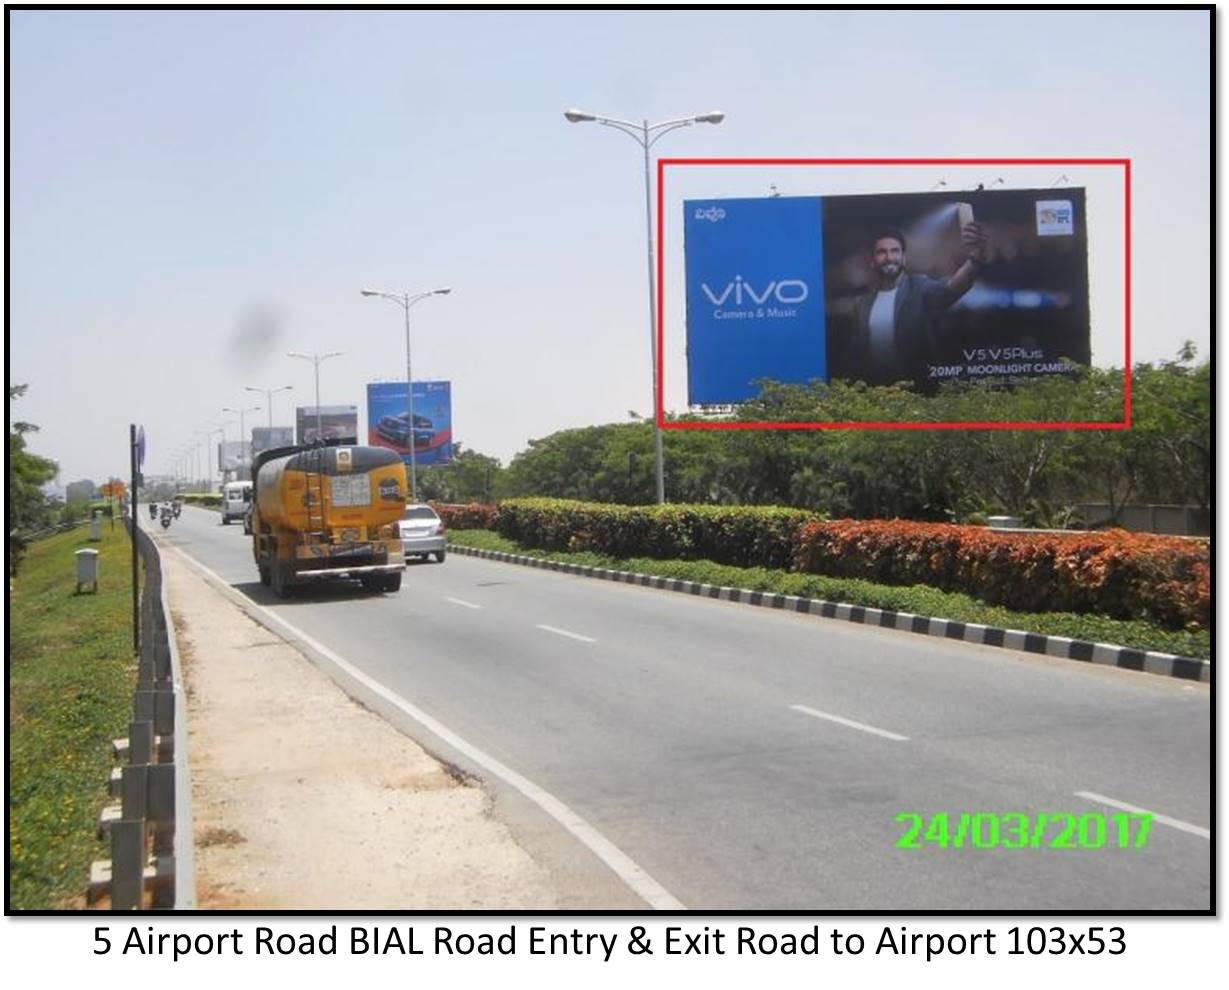 Airport Road BIAL Road Entry and Exit Road, Bengaluru